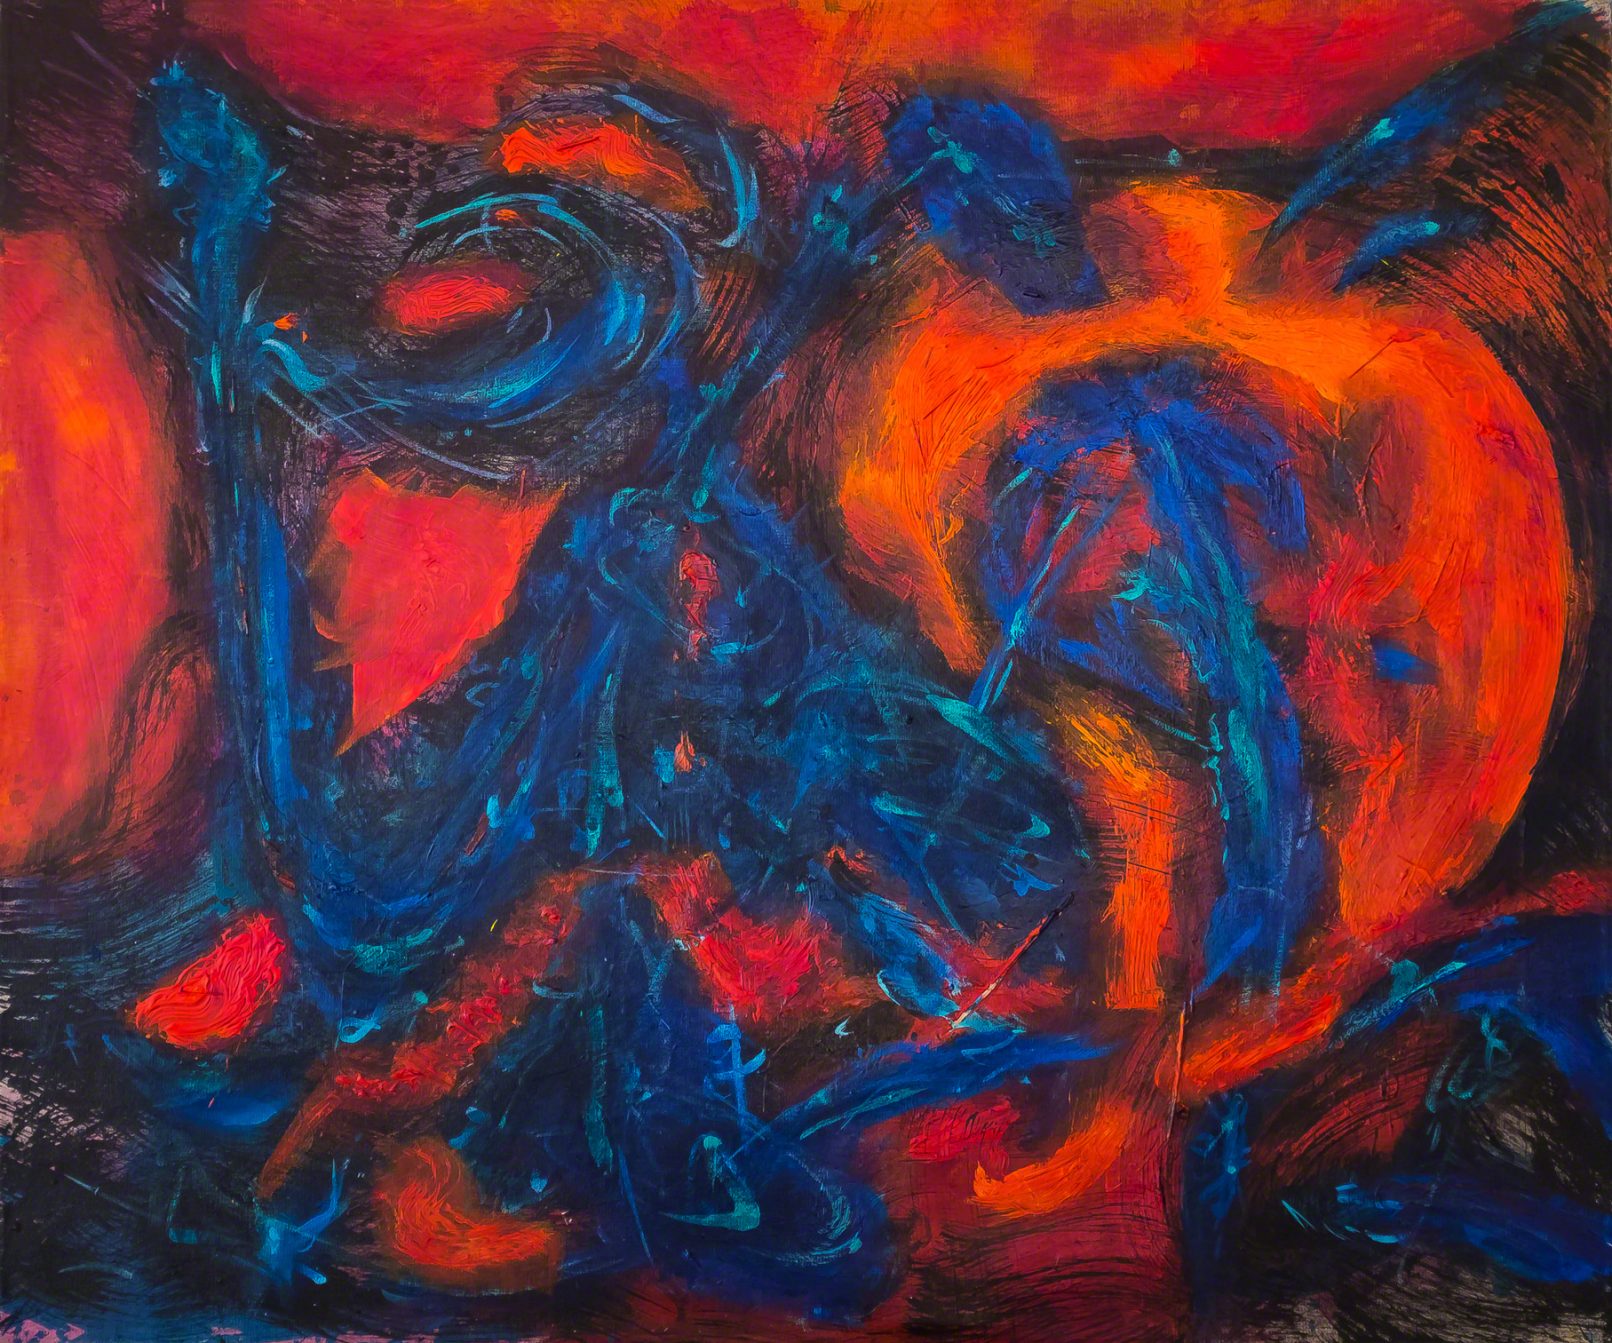 CIRCLE 6 - 120 x 100 cm, acrylic on canvas, 2018.